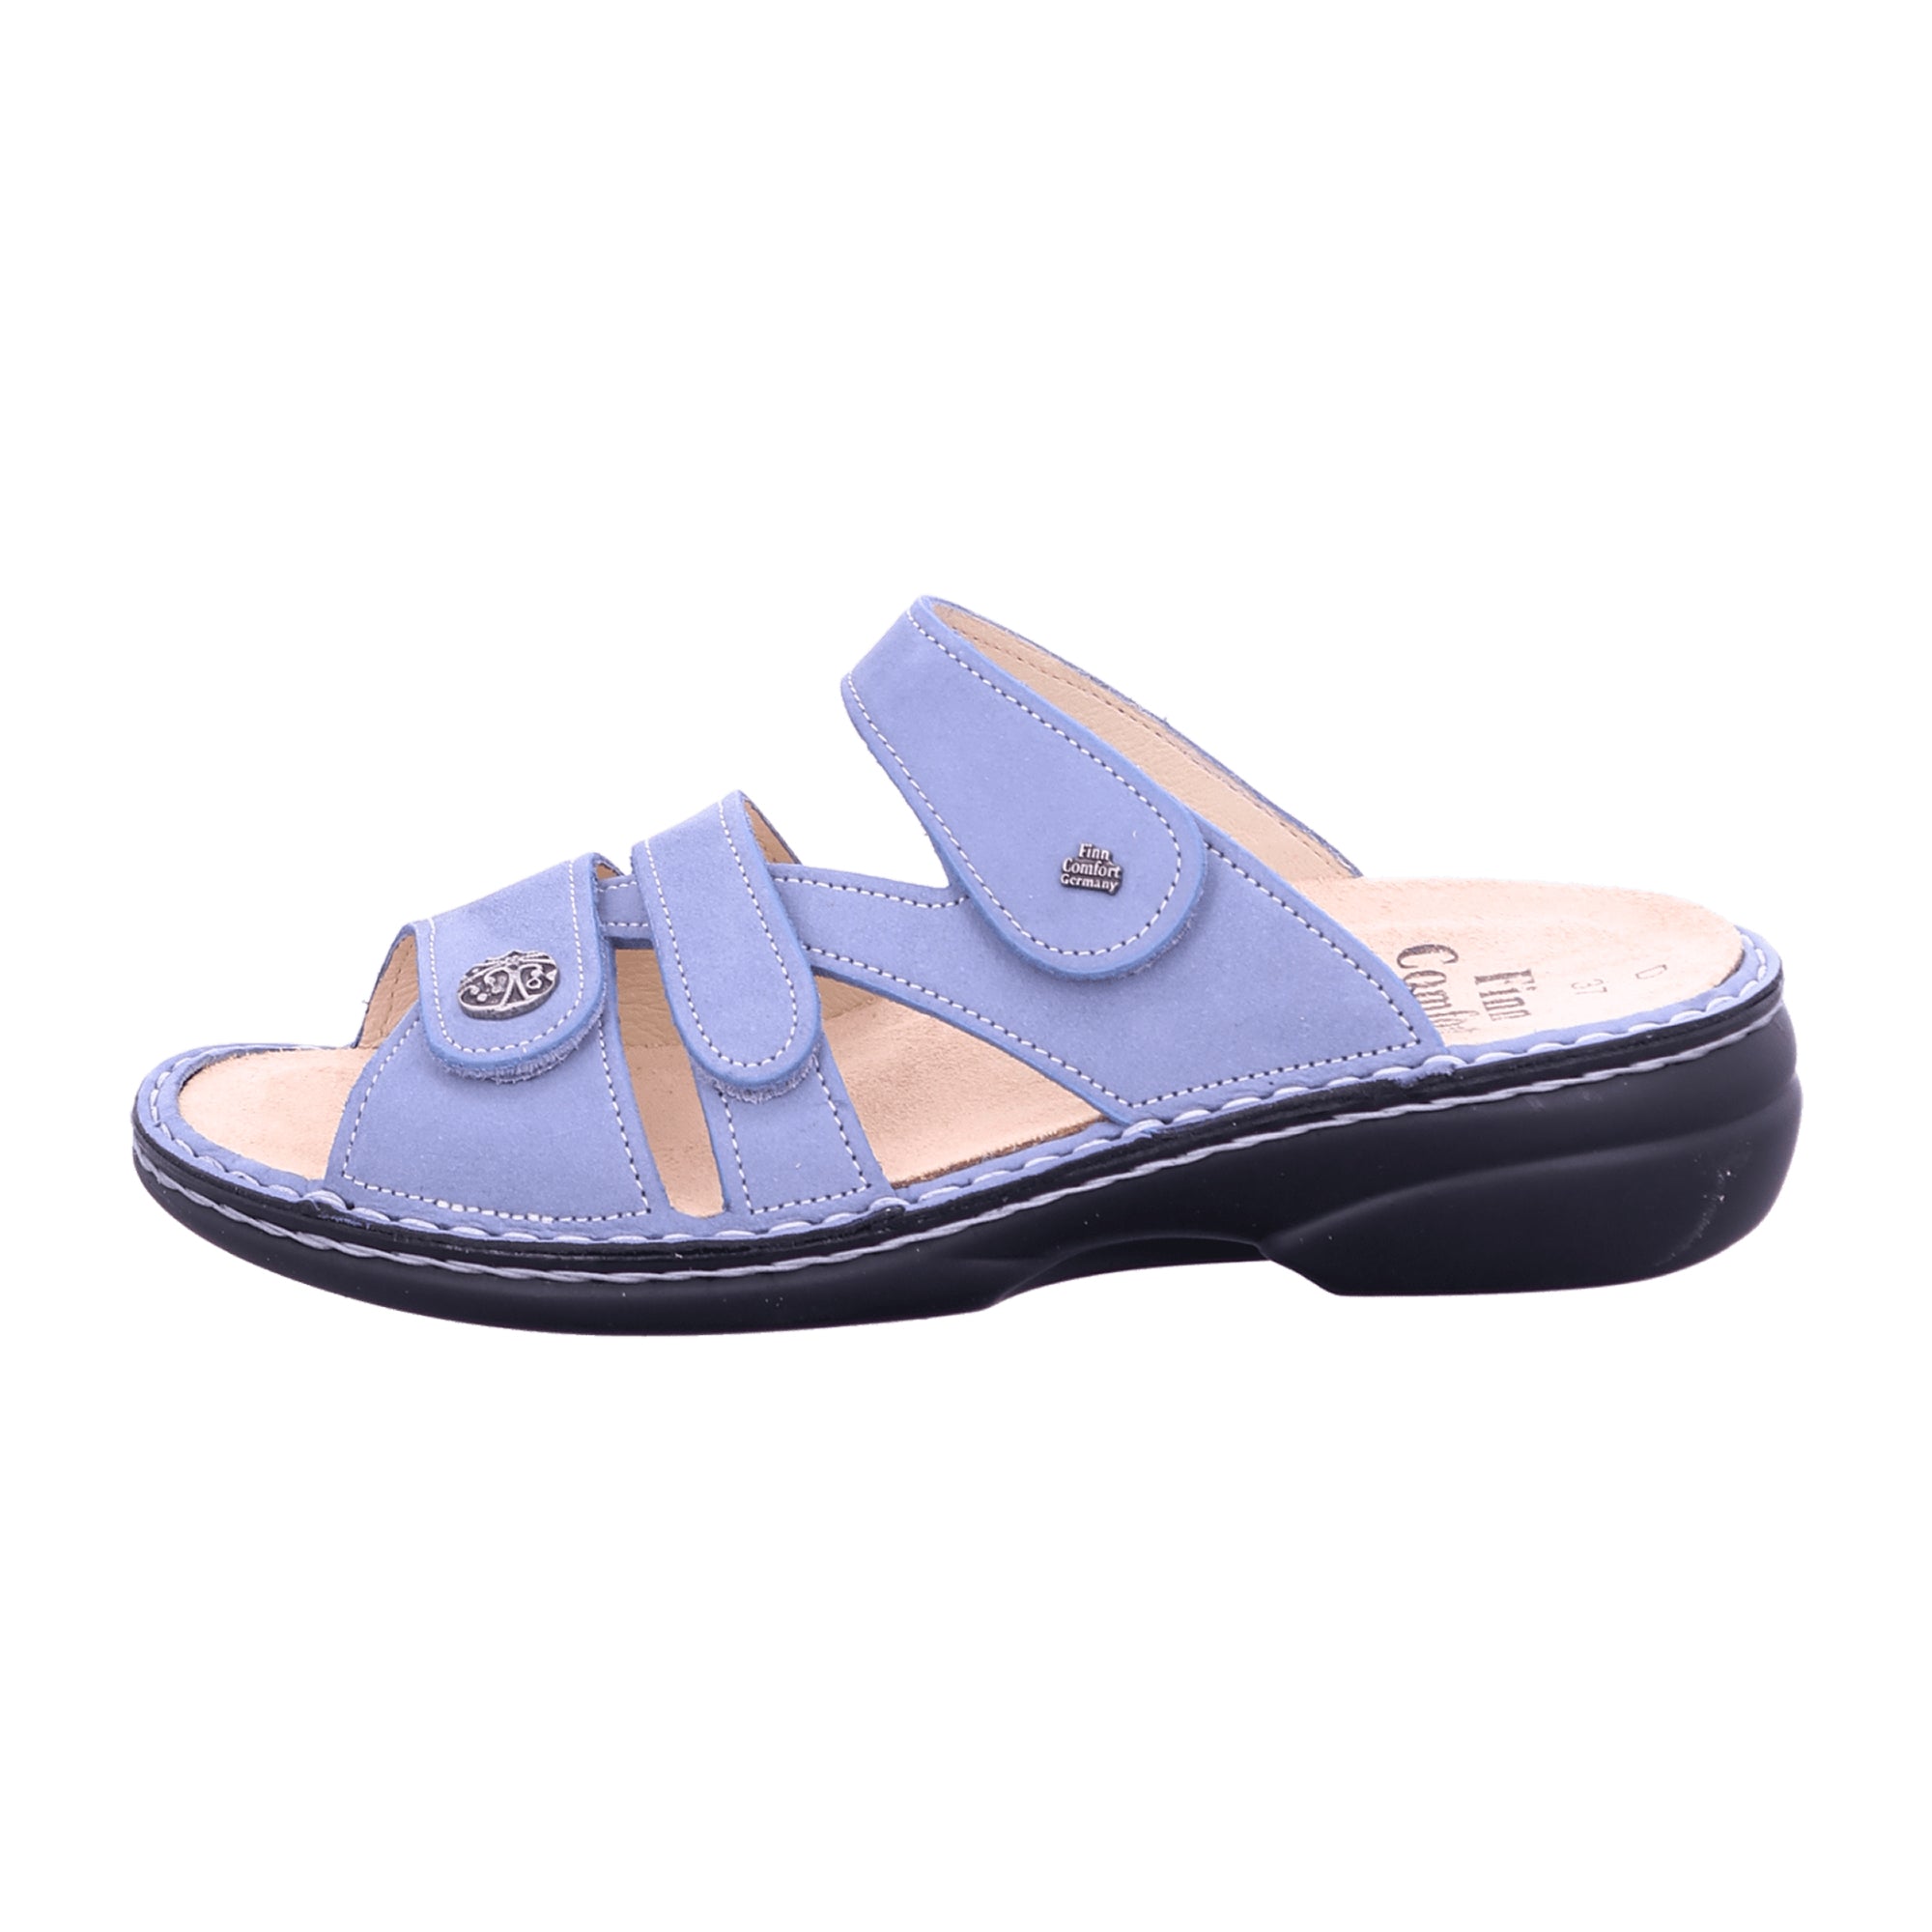 Finn Comfort Ventura-S Women's Comfort Sandals, Blue - Stylish & Durable